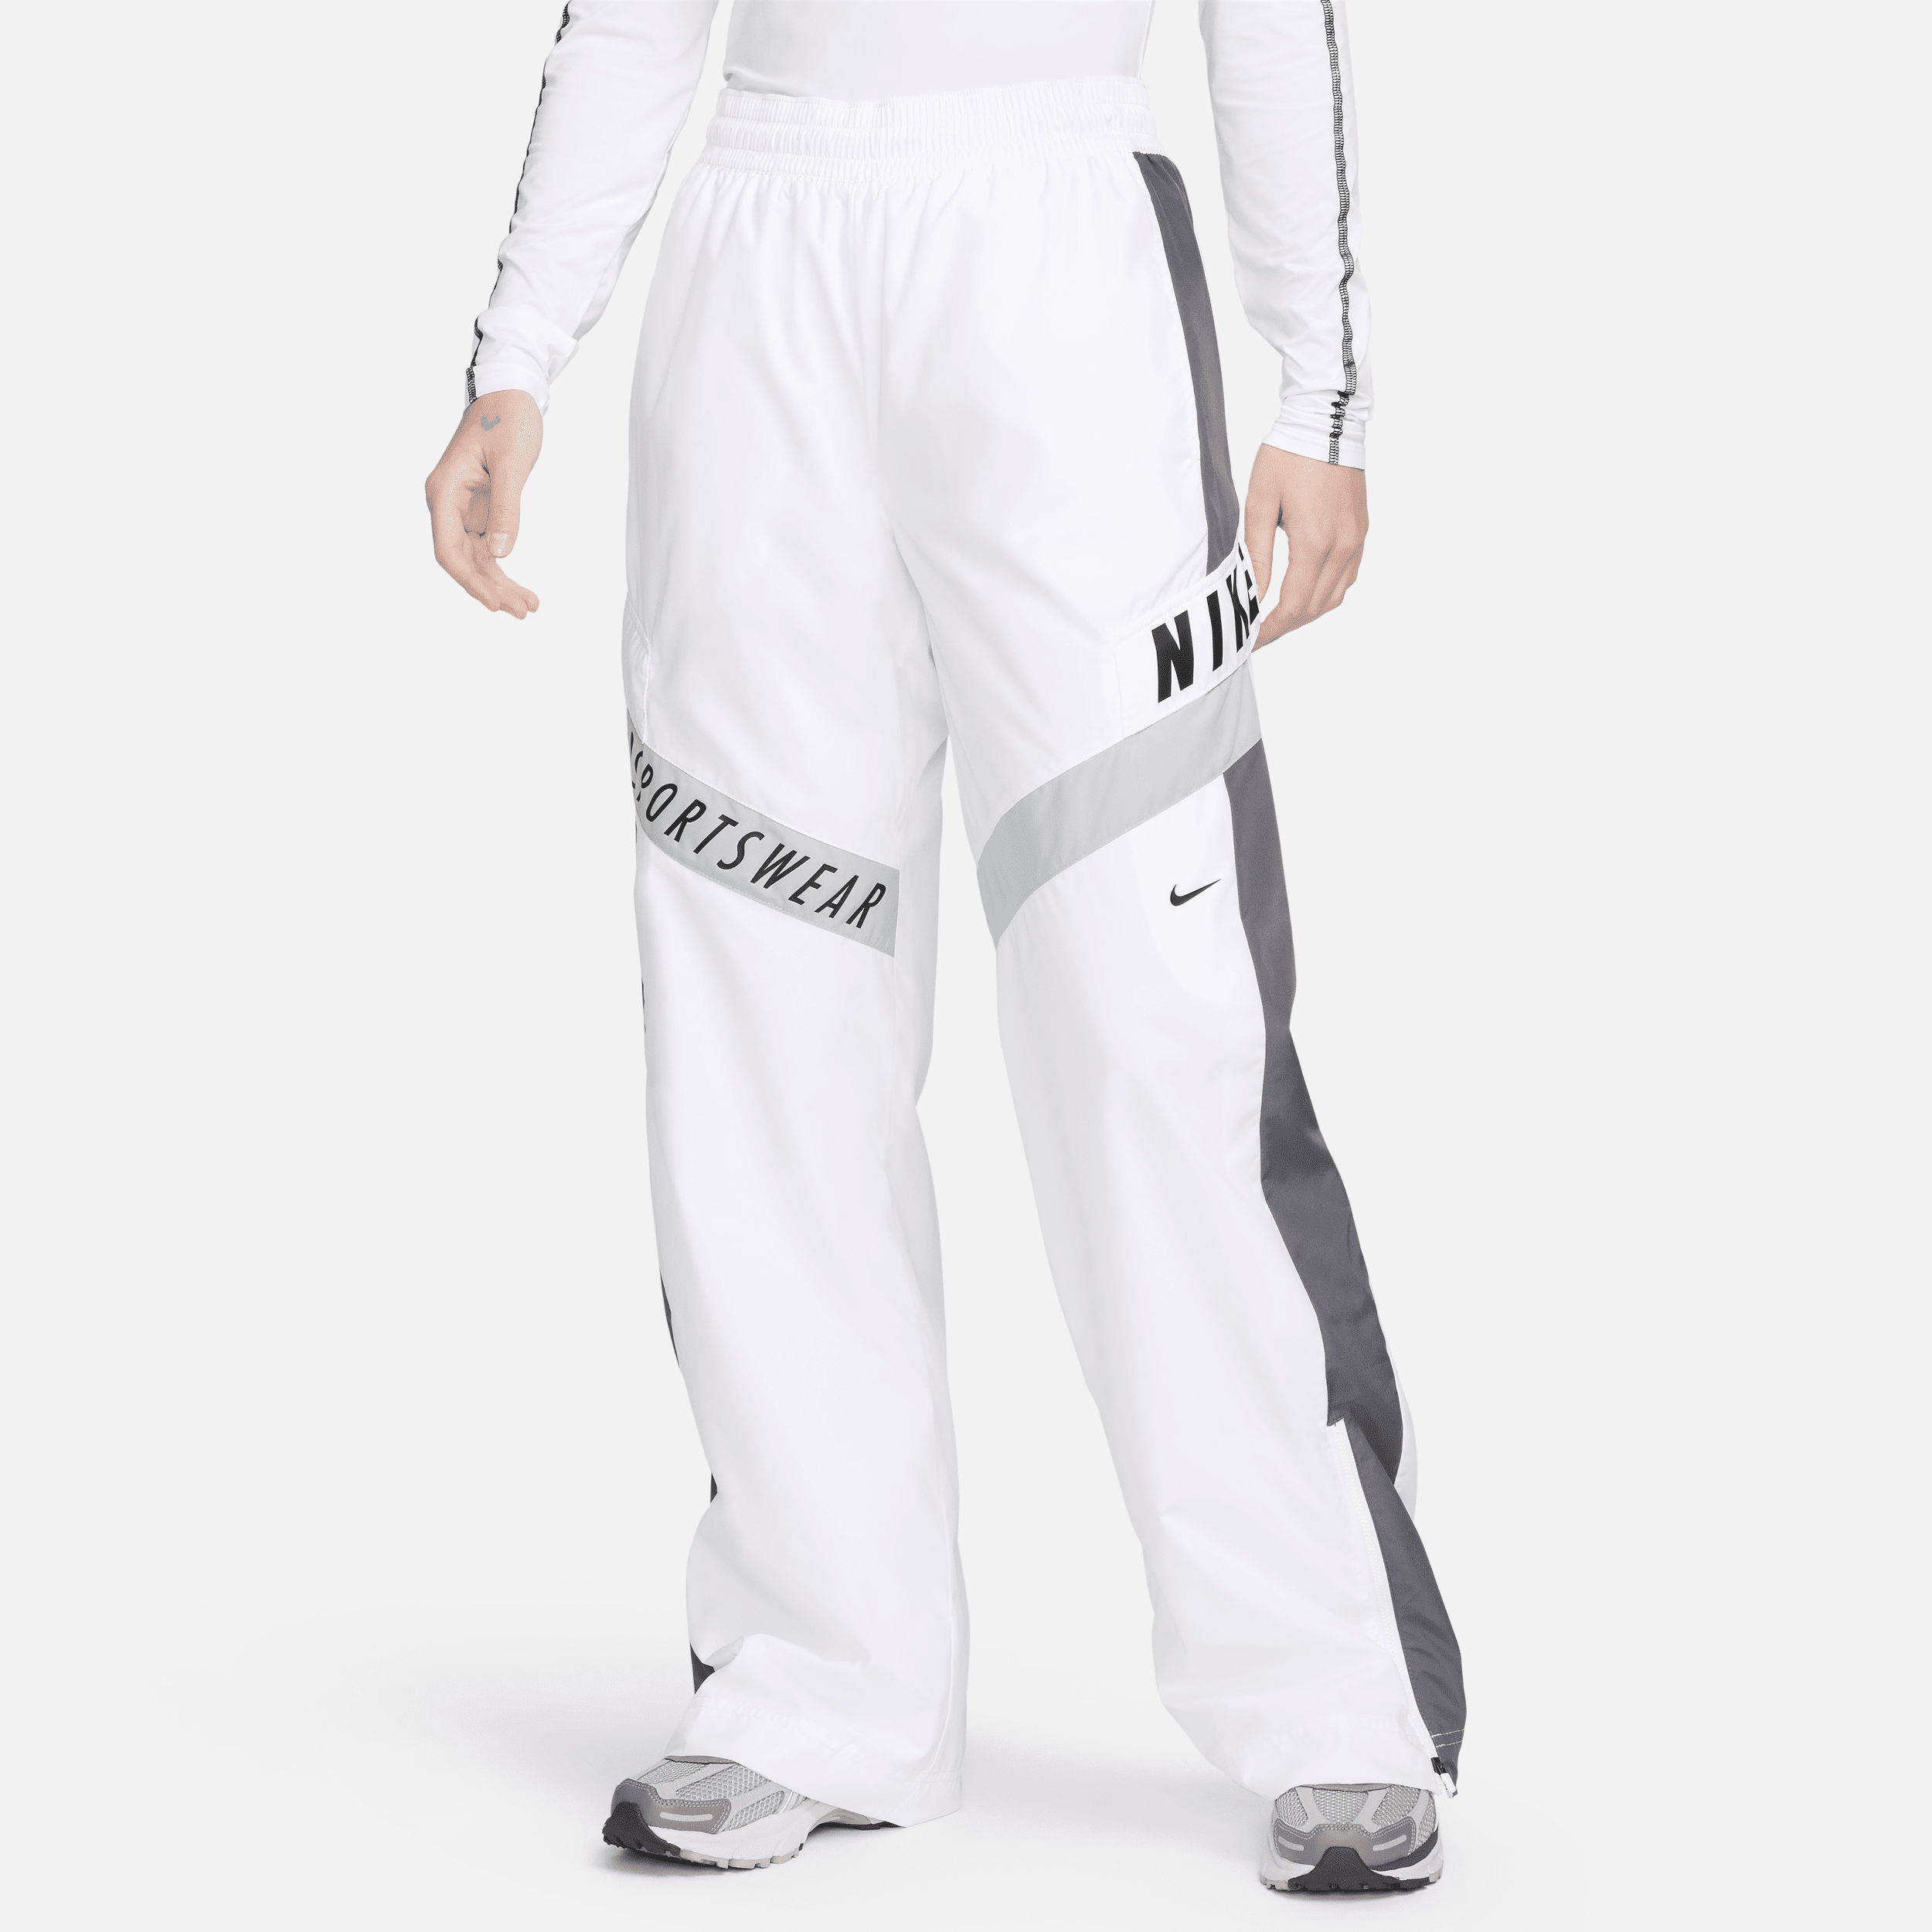 Pantaloni a vita alta Nike Sportswear – Donna - Bianco